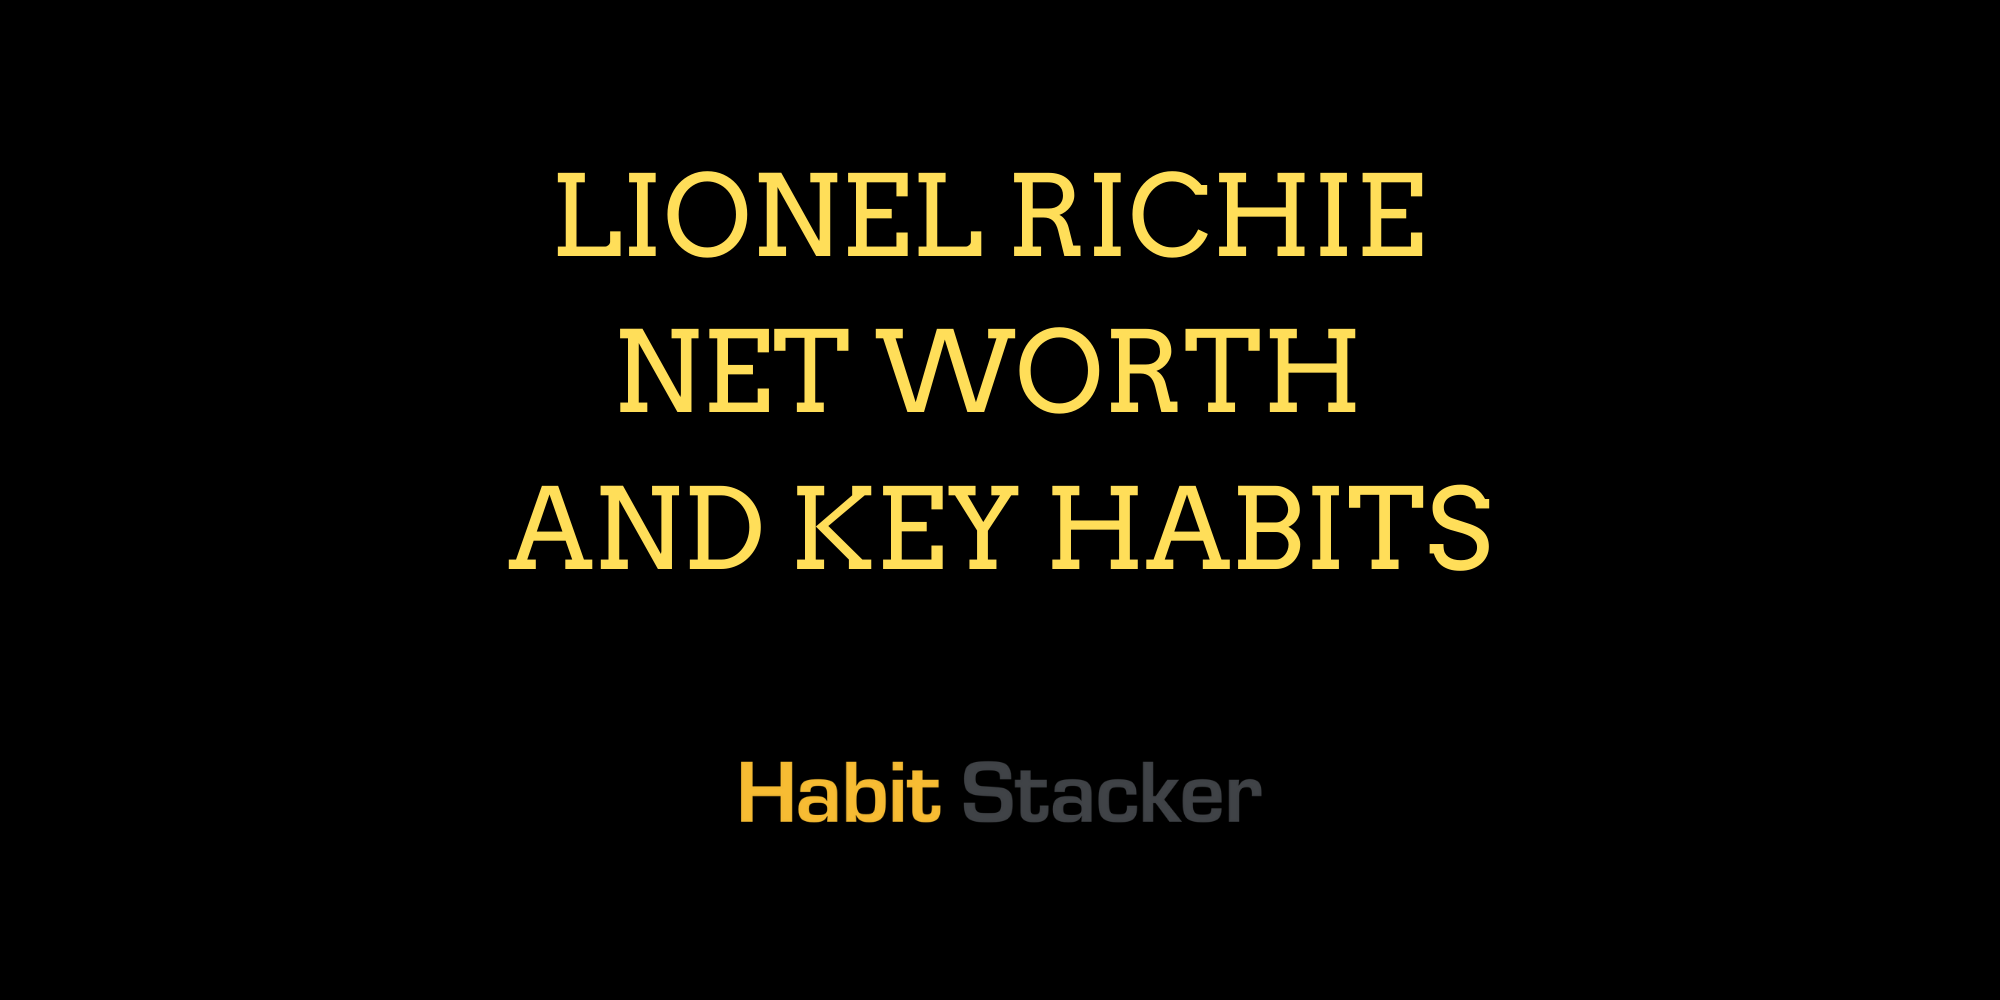 Lionel Richie Net Worth and Key Habits